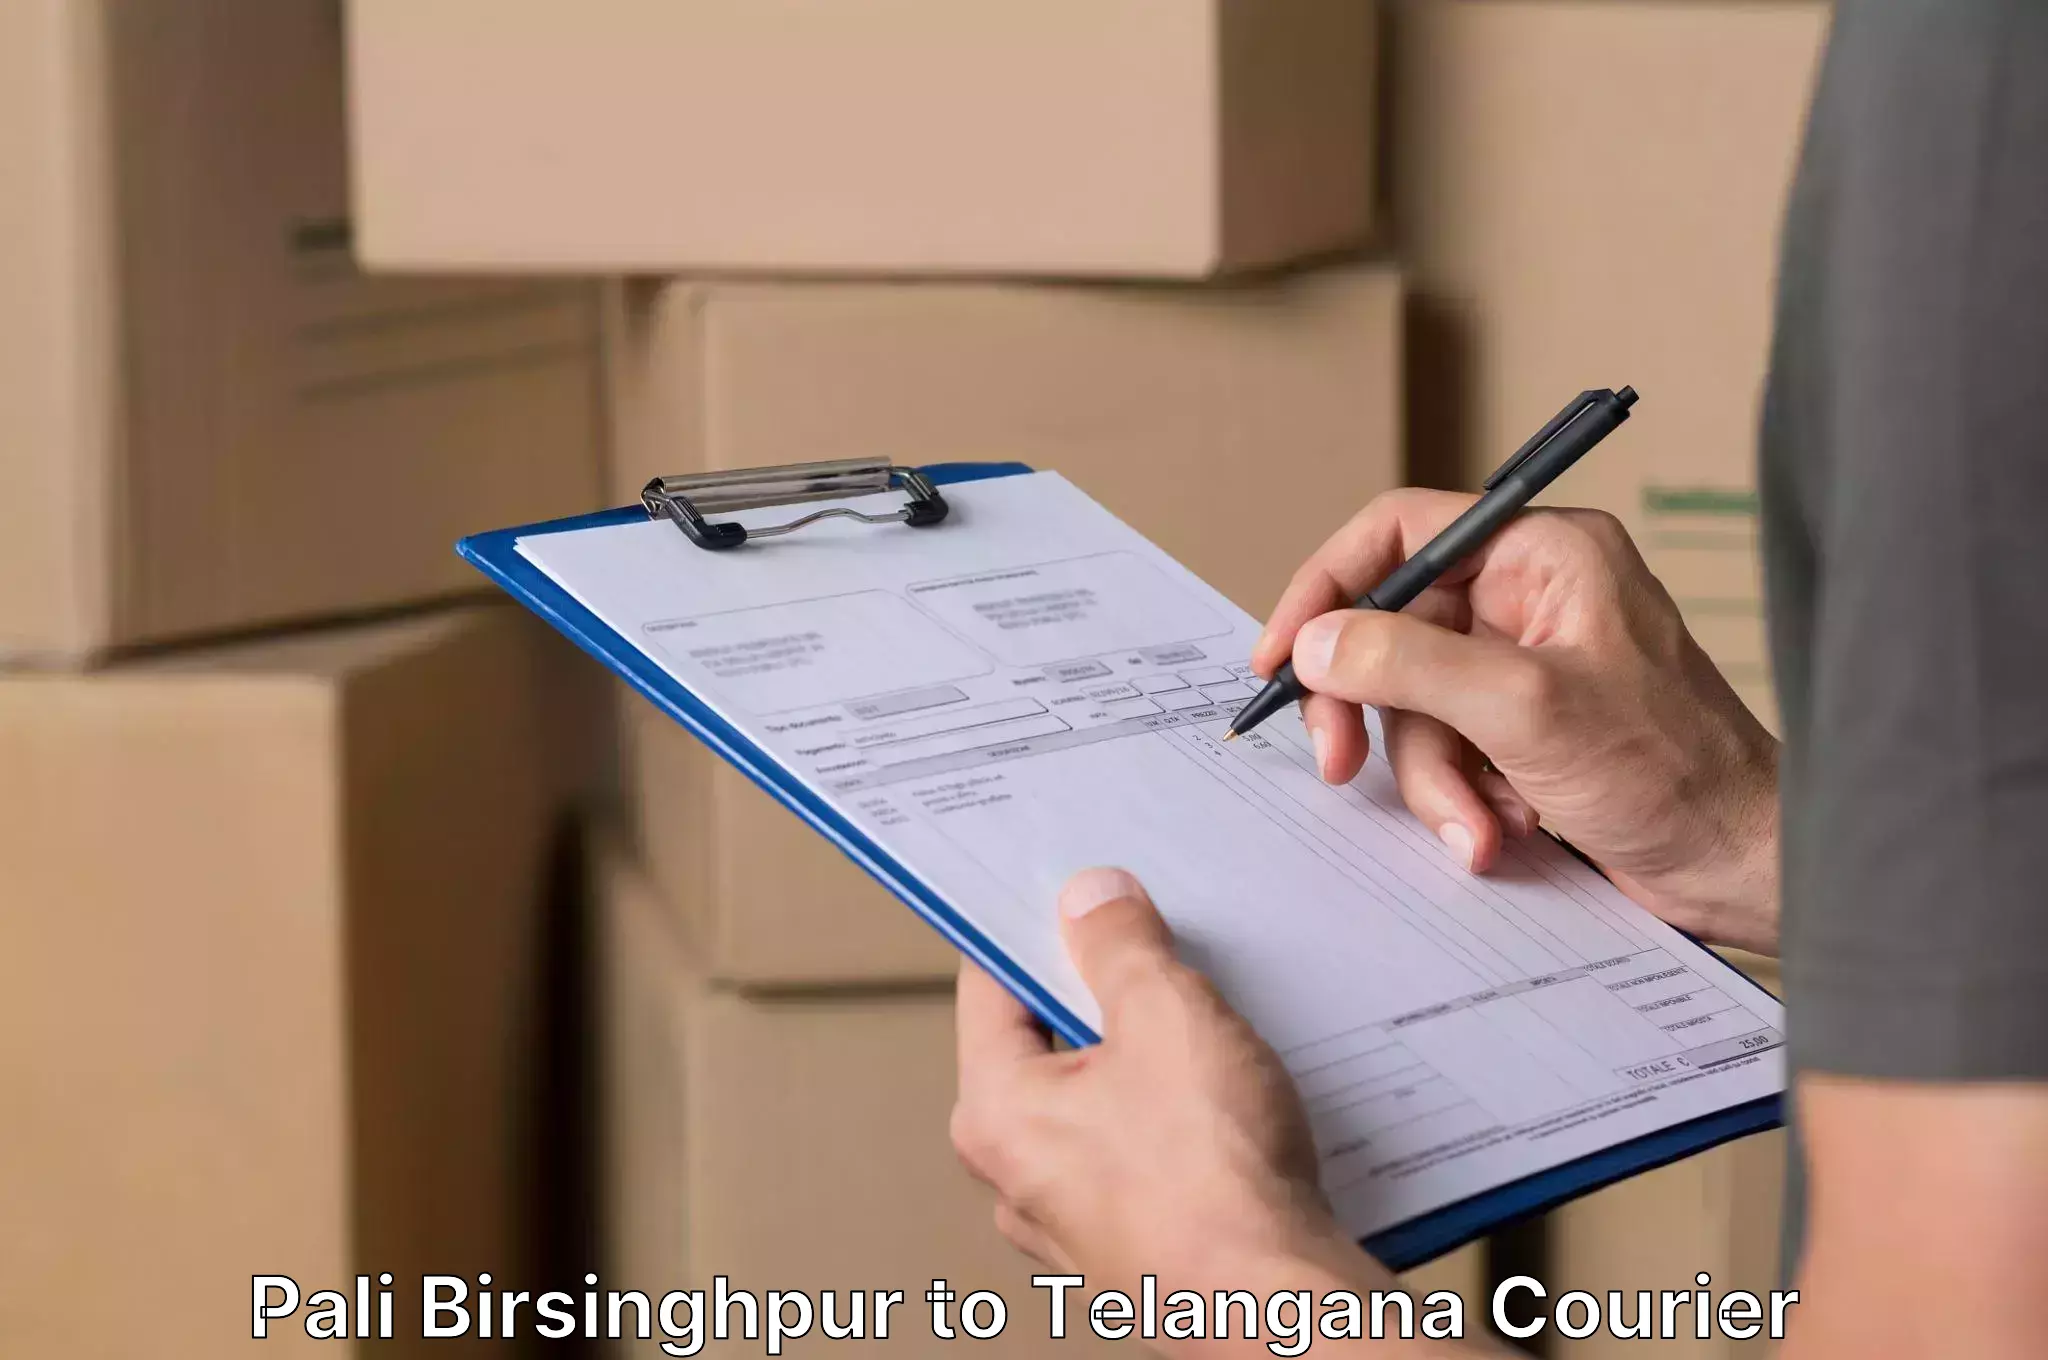 Cost-effective moving options Pali Birsinghpur to Sathupally